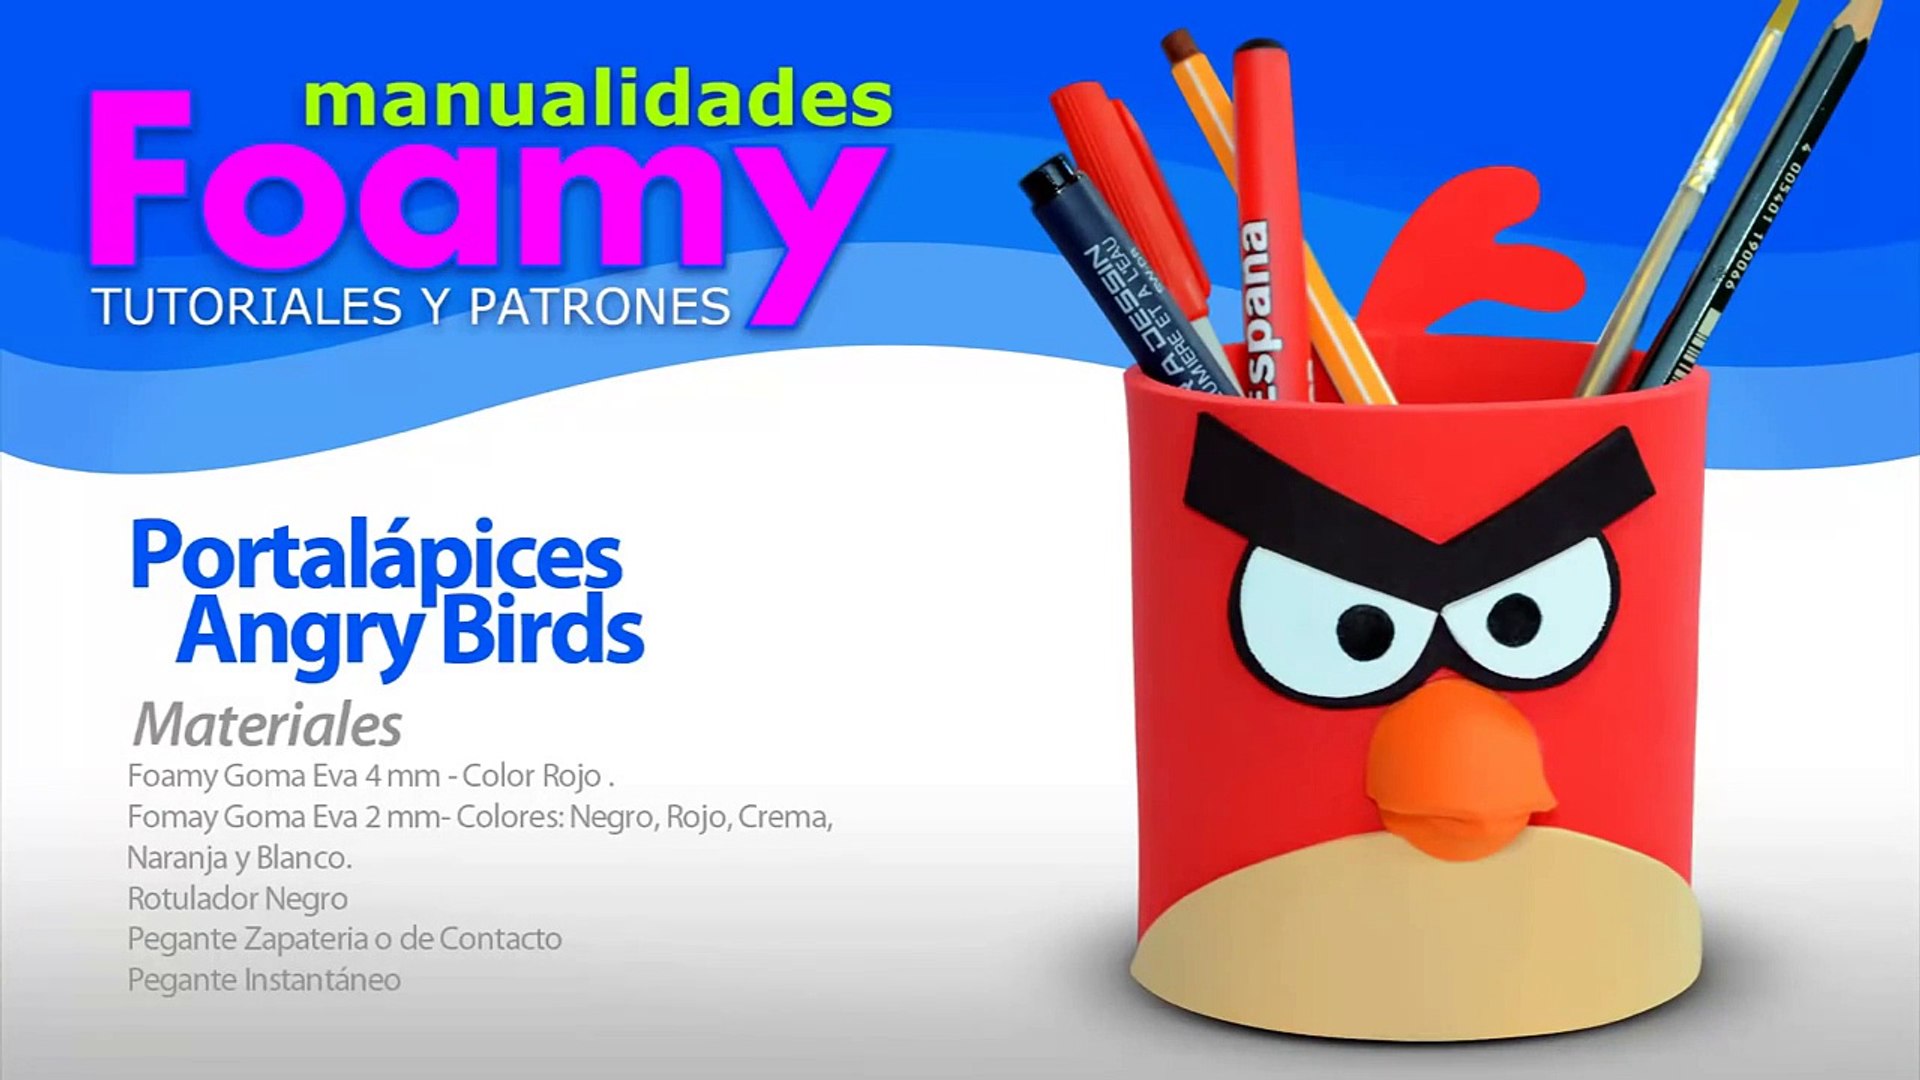 Portalapices Angry Birds Foamy Goma Eva─影片 Dailymotion